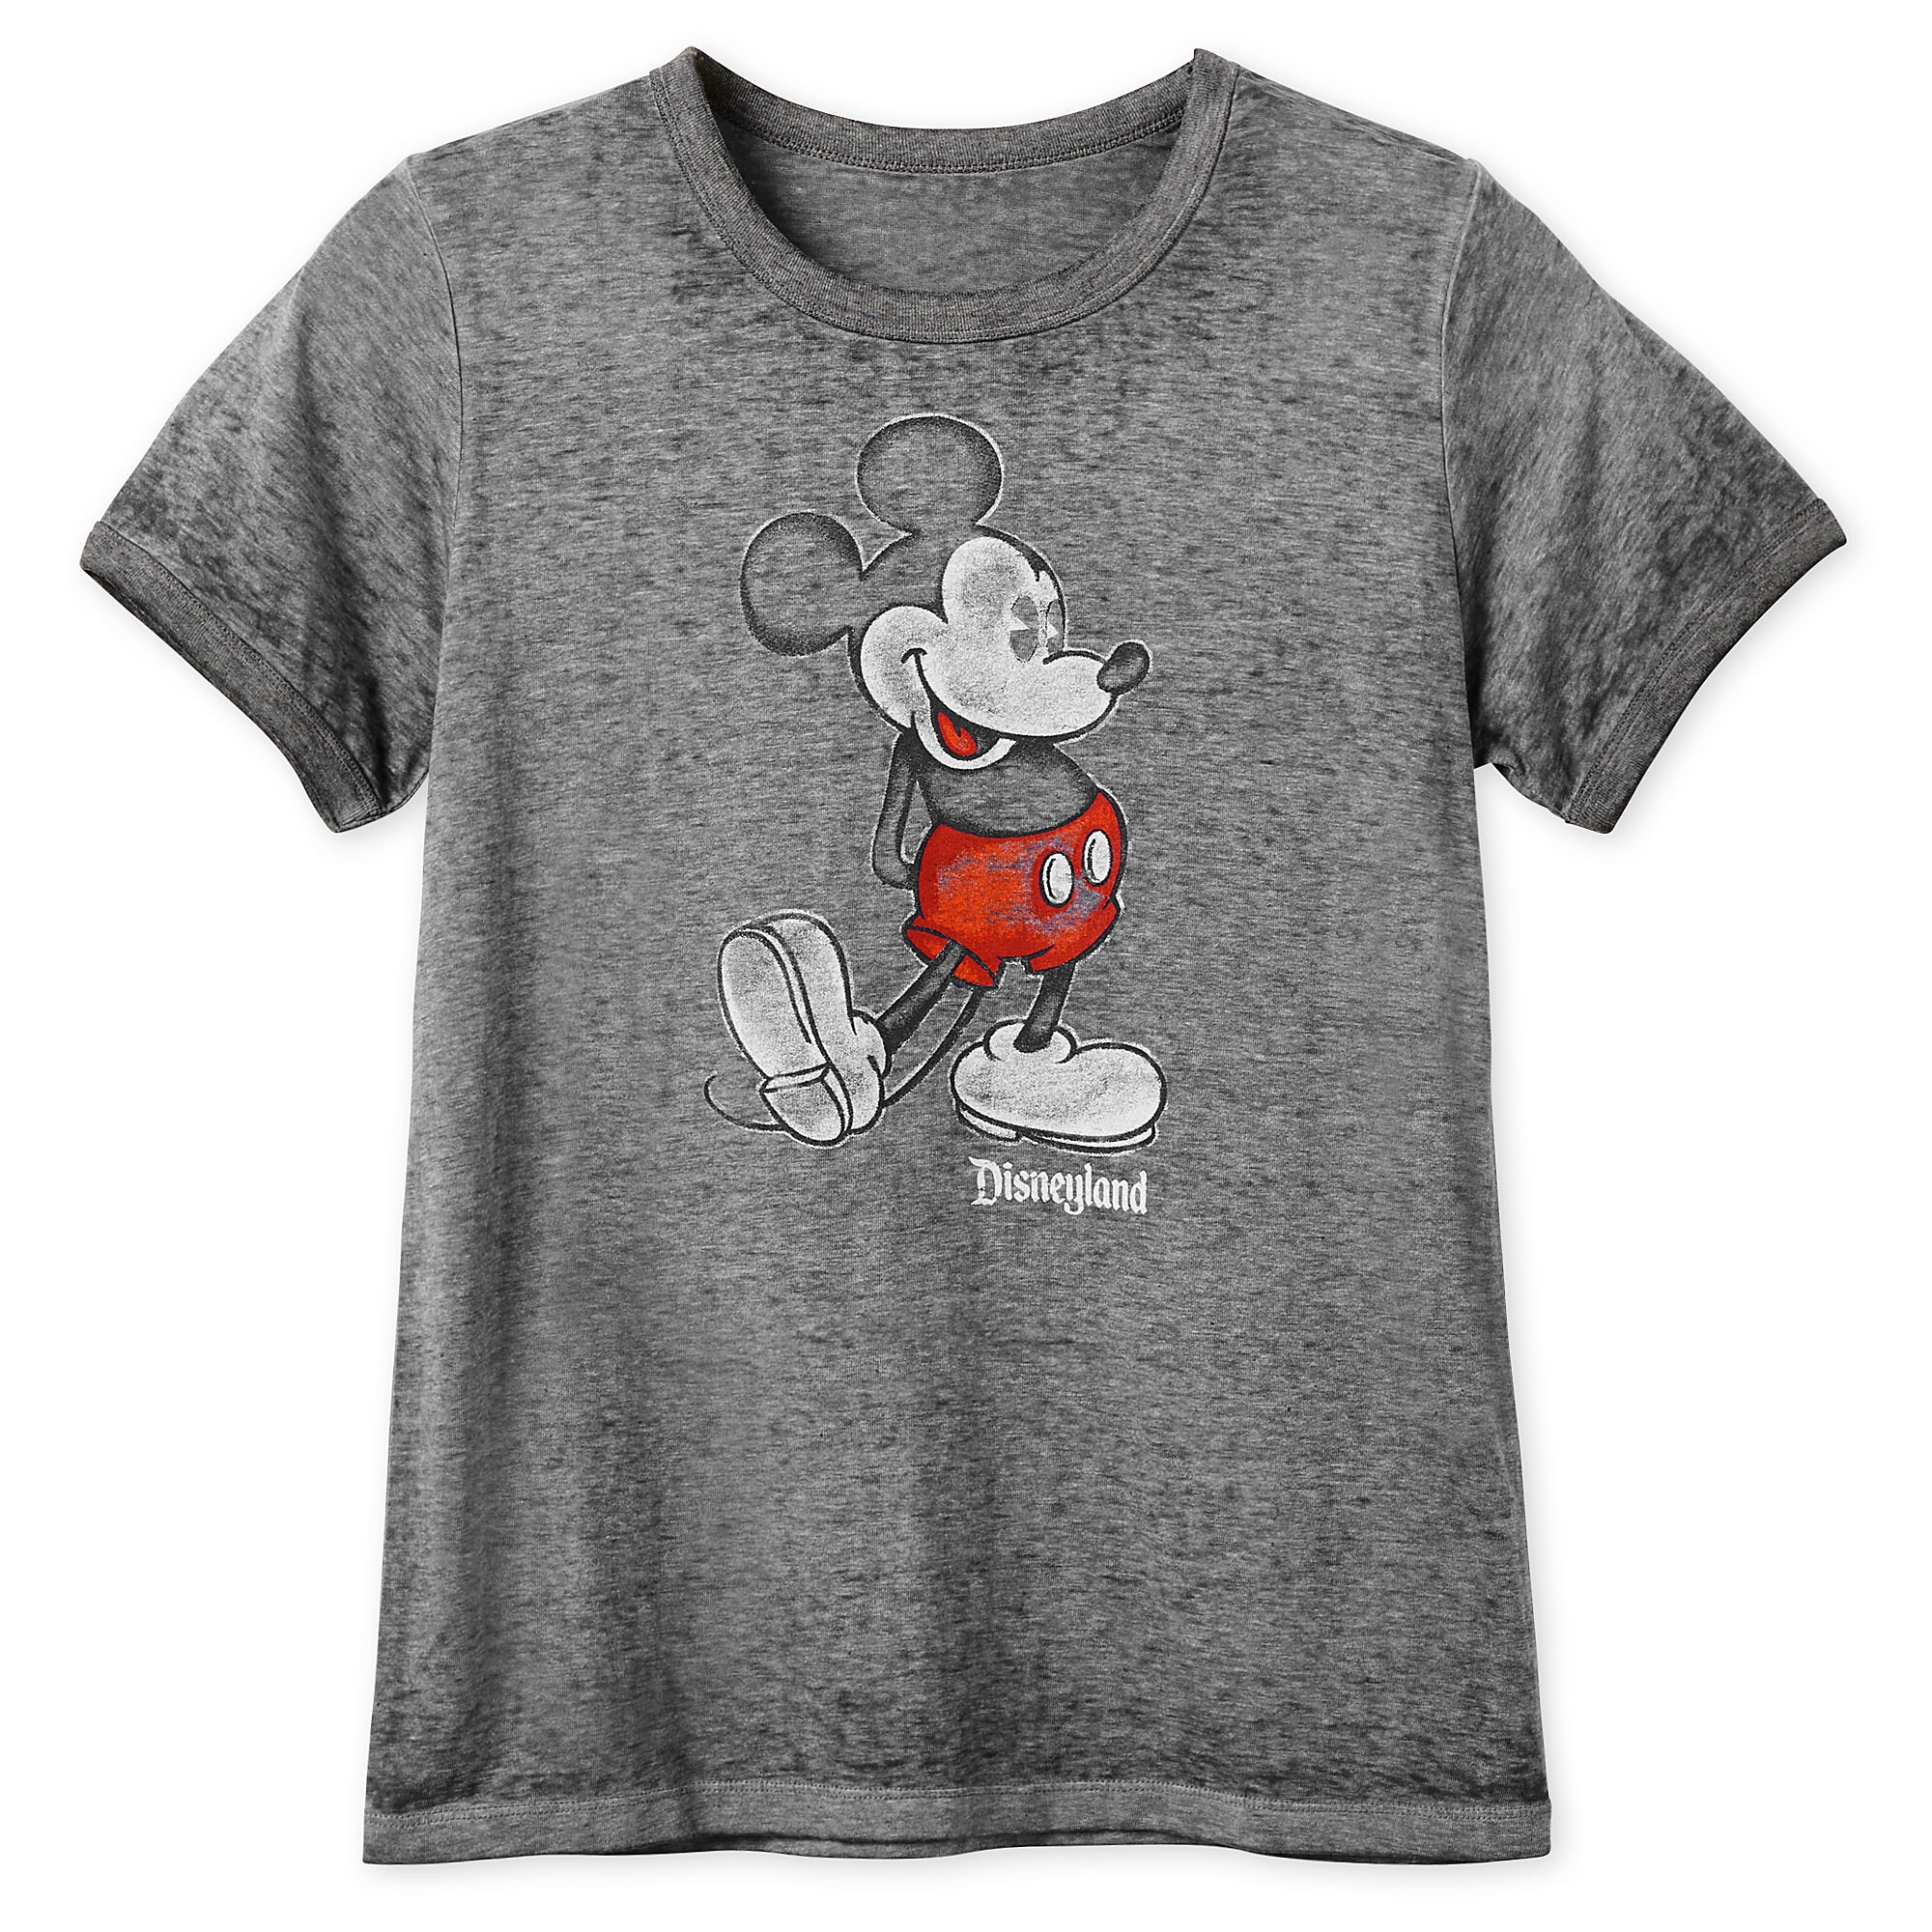 Mickey Mouse Heathered Ringer T-Shirt for Women - Disneyland - Black